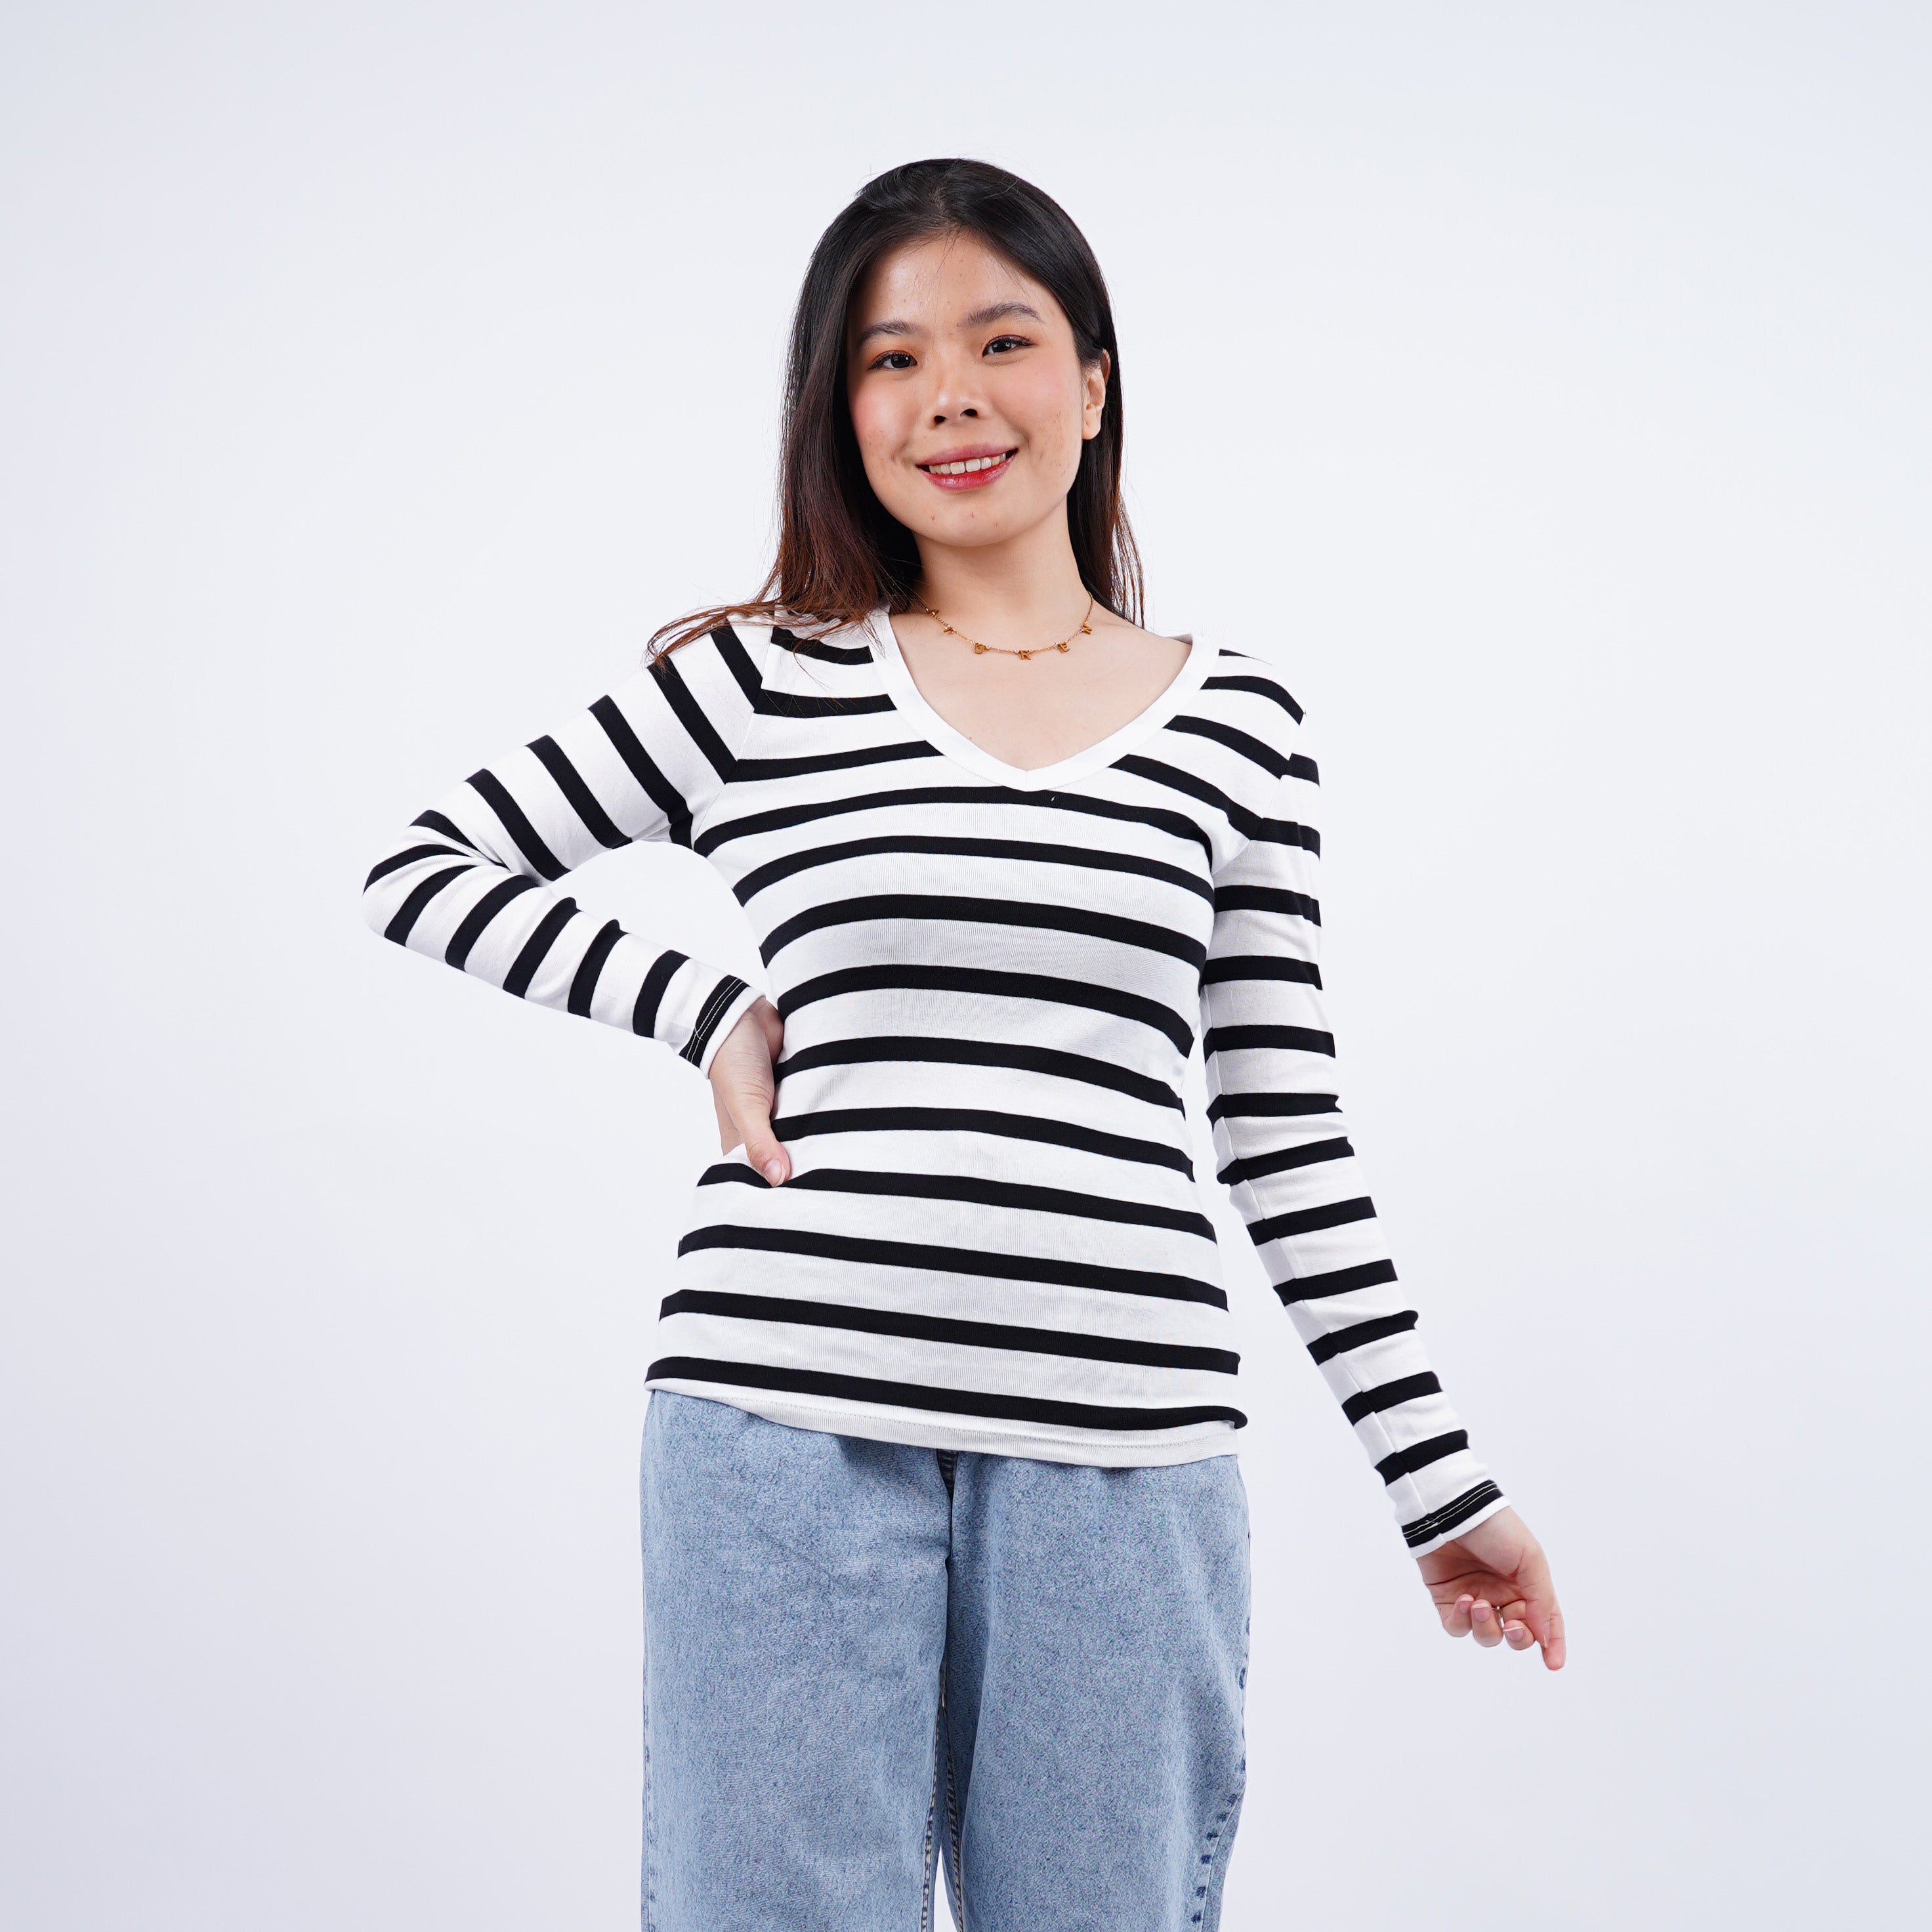 Kaos Wanita Model Lengan Panjang Tersedia 5 Warna [CG-ONTL 03]